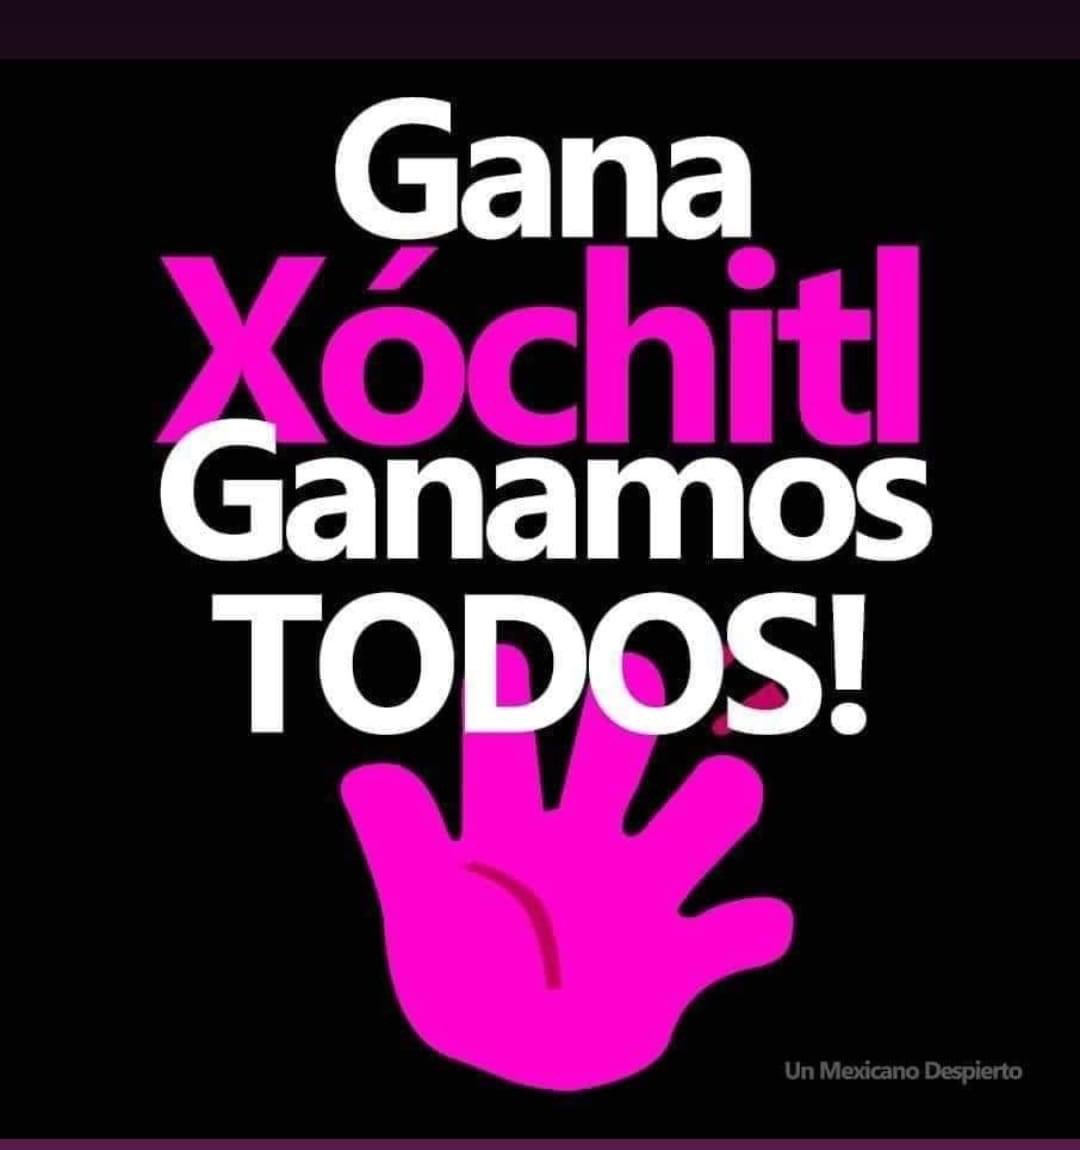 @chiquis0922 @XochitlGalvez Para que te eduques chairo mugroso

#MiVotoParaXochitl15
#NarcoPresidenteAMLO57
#NarcoCandidataClaudia57 
#AmbicionPersonal
#FueraMorena 
#NarcoCandidataDeLasMentiras